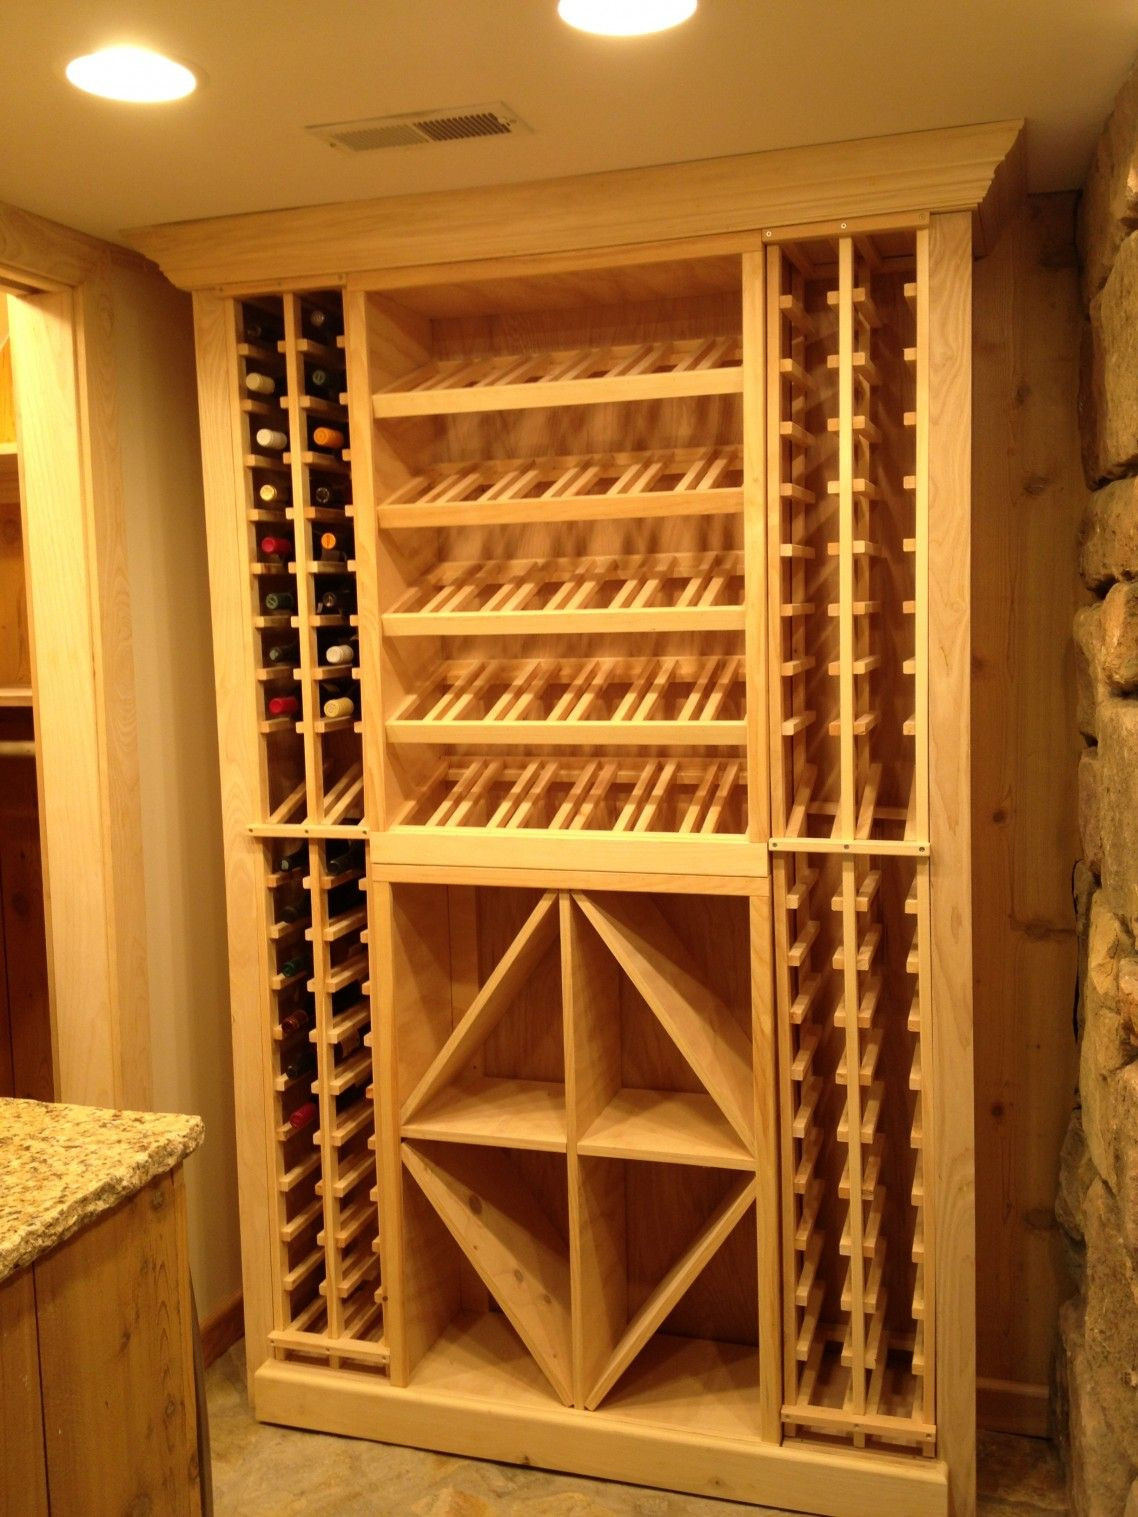 DIY Wine Cellar Rack
 wine rank wood diy Google otsing